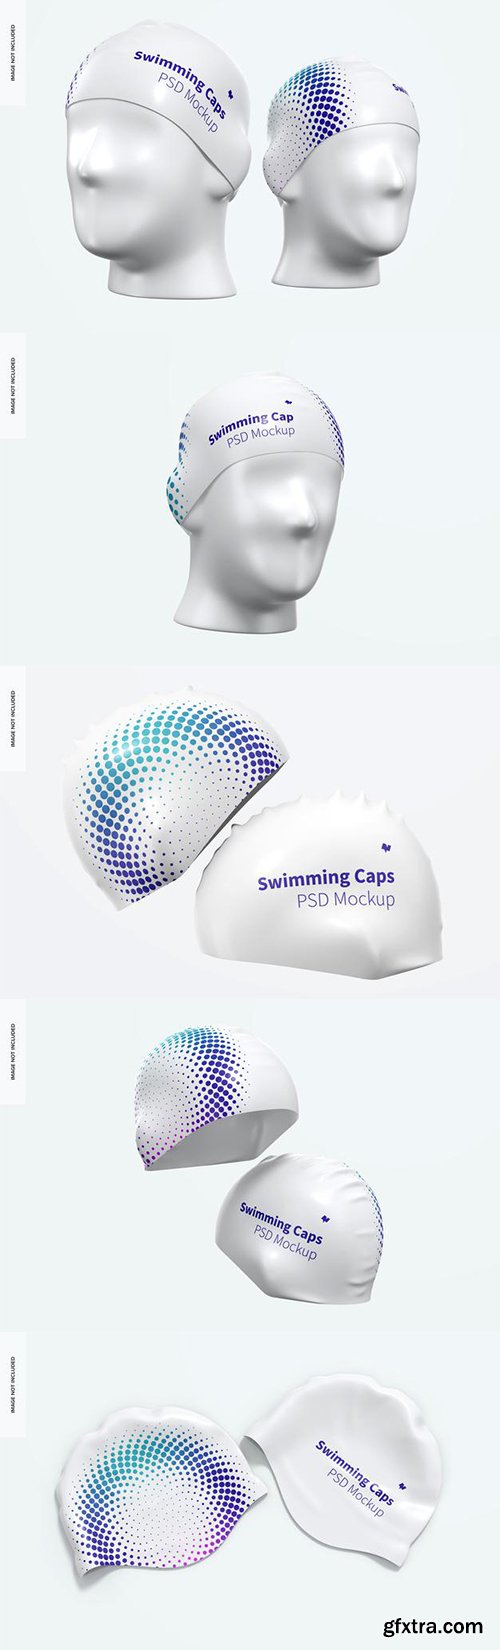 Swimming caps on head mockup